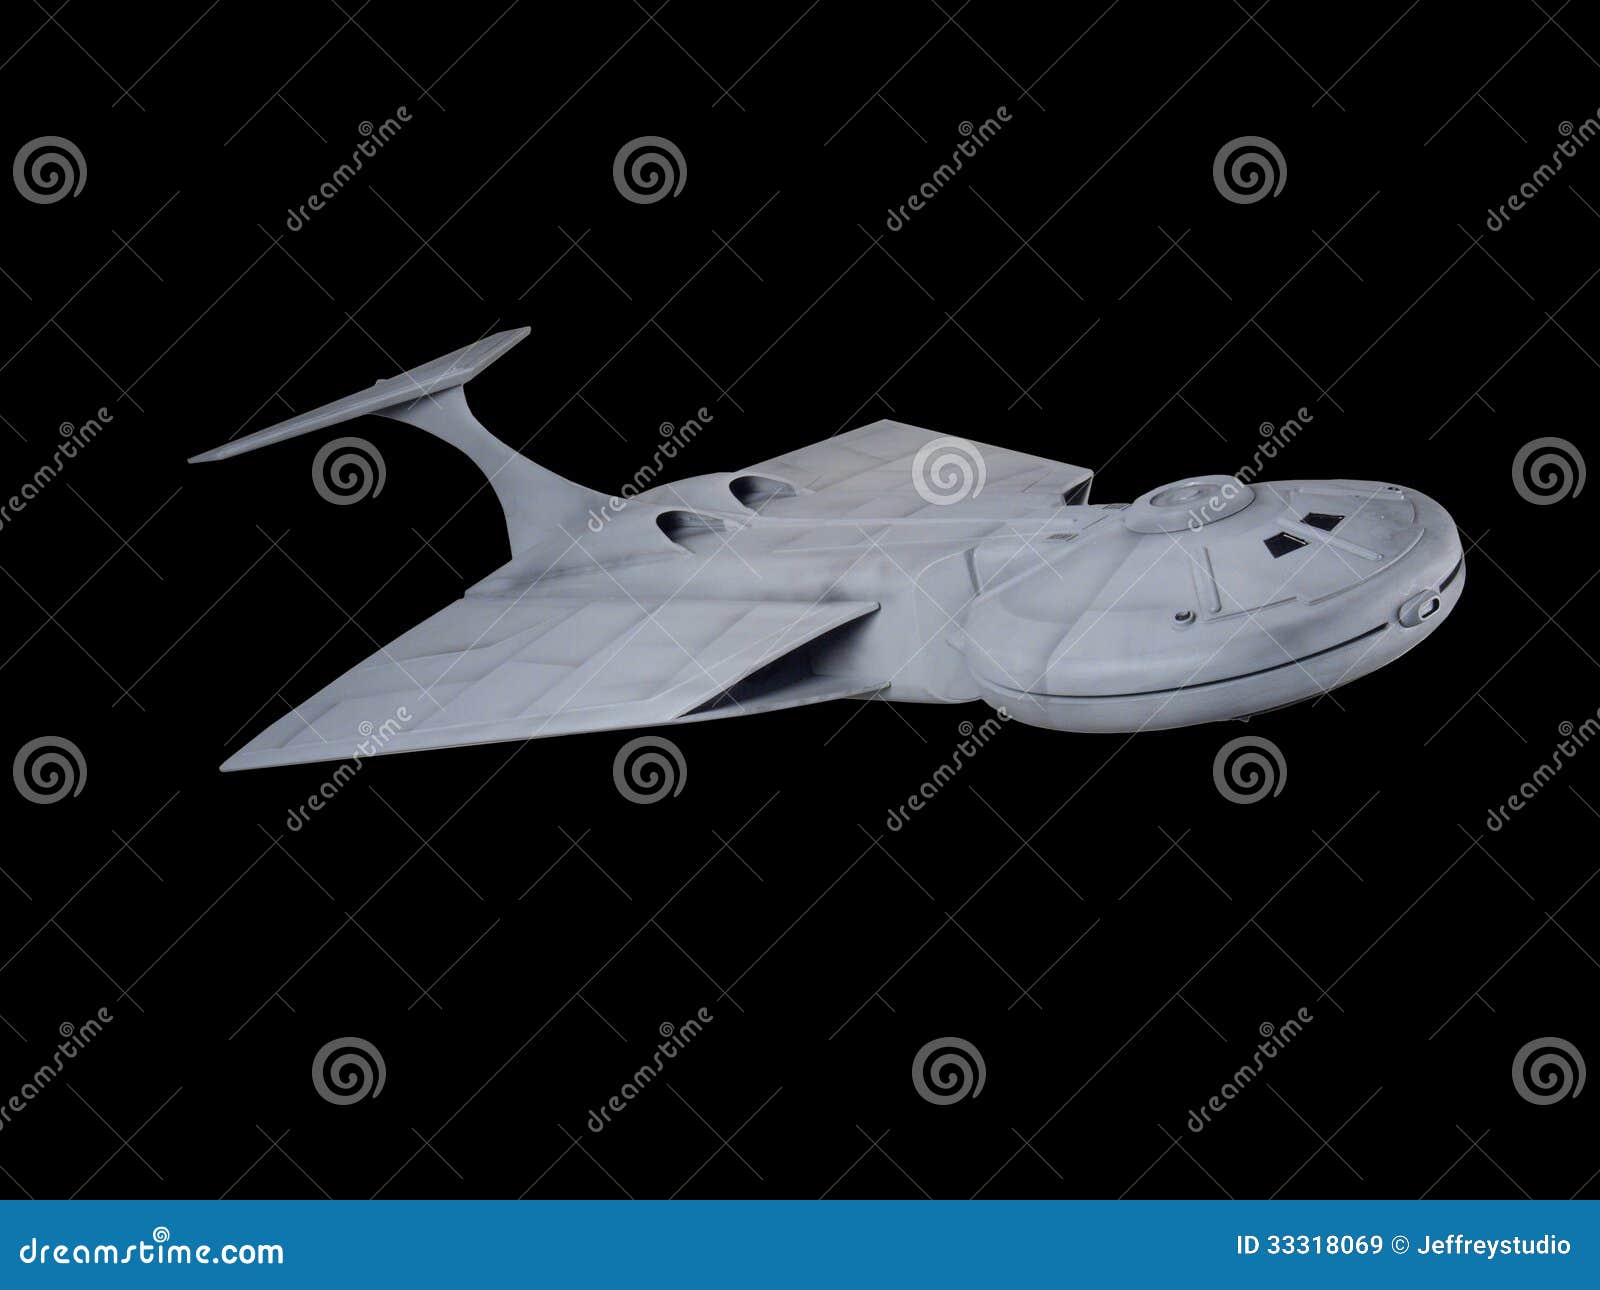 delta starship one